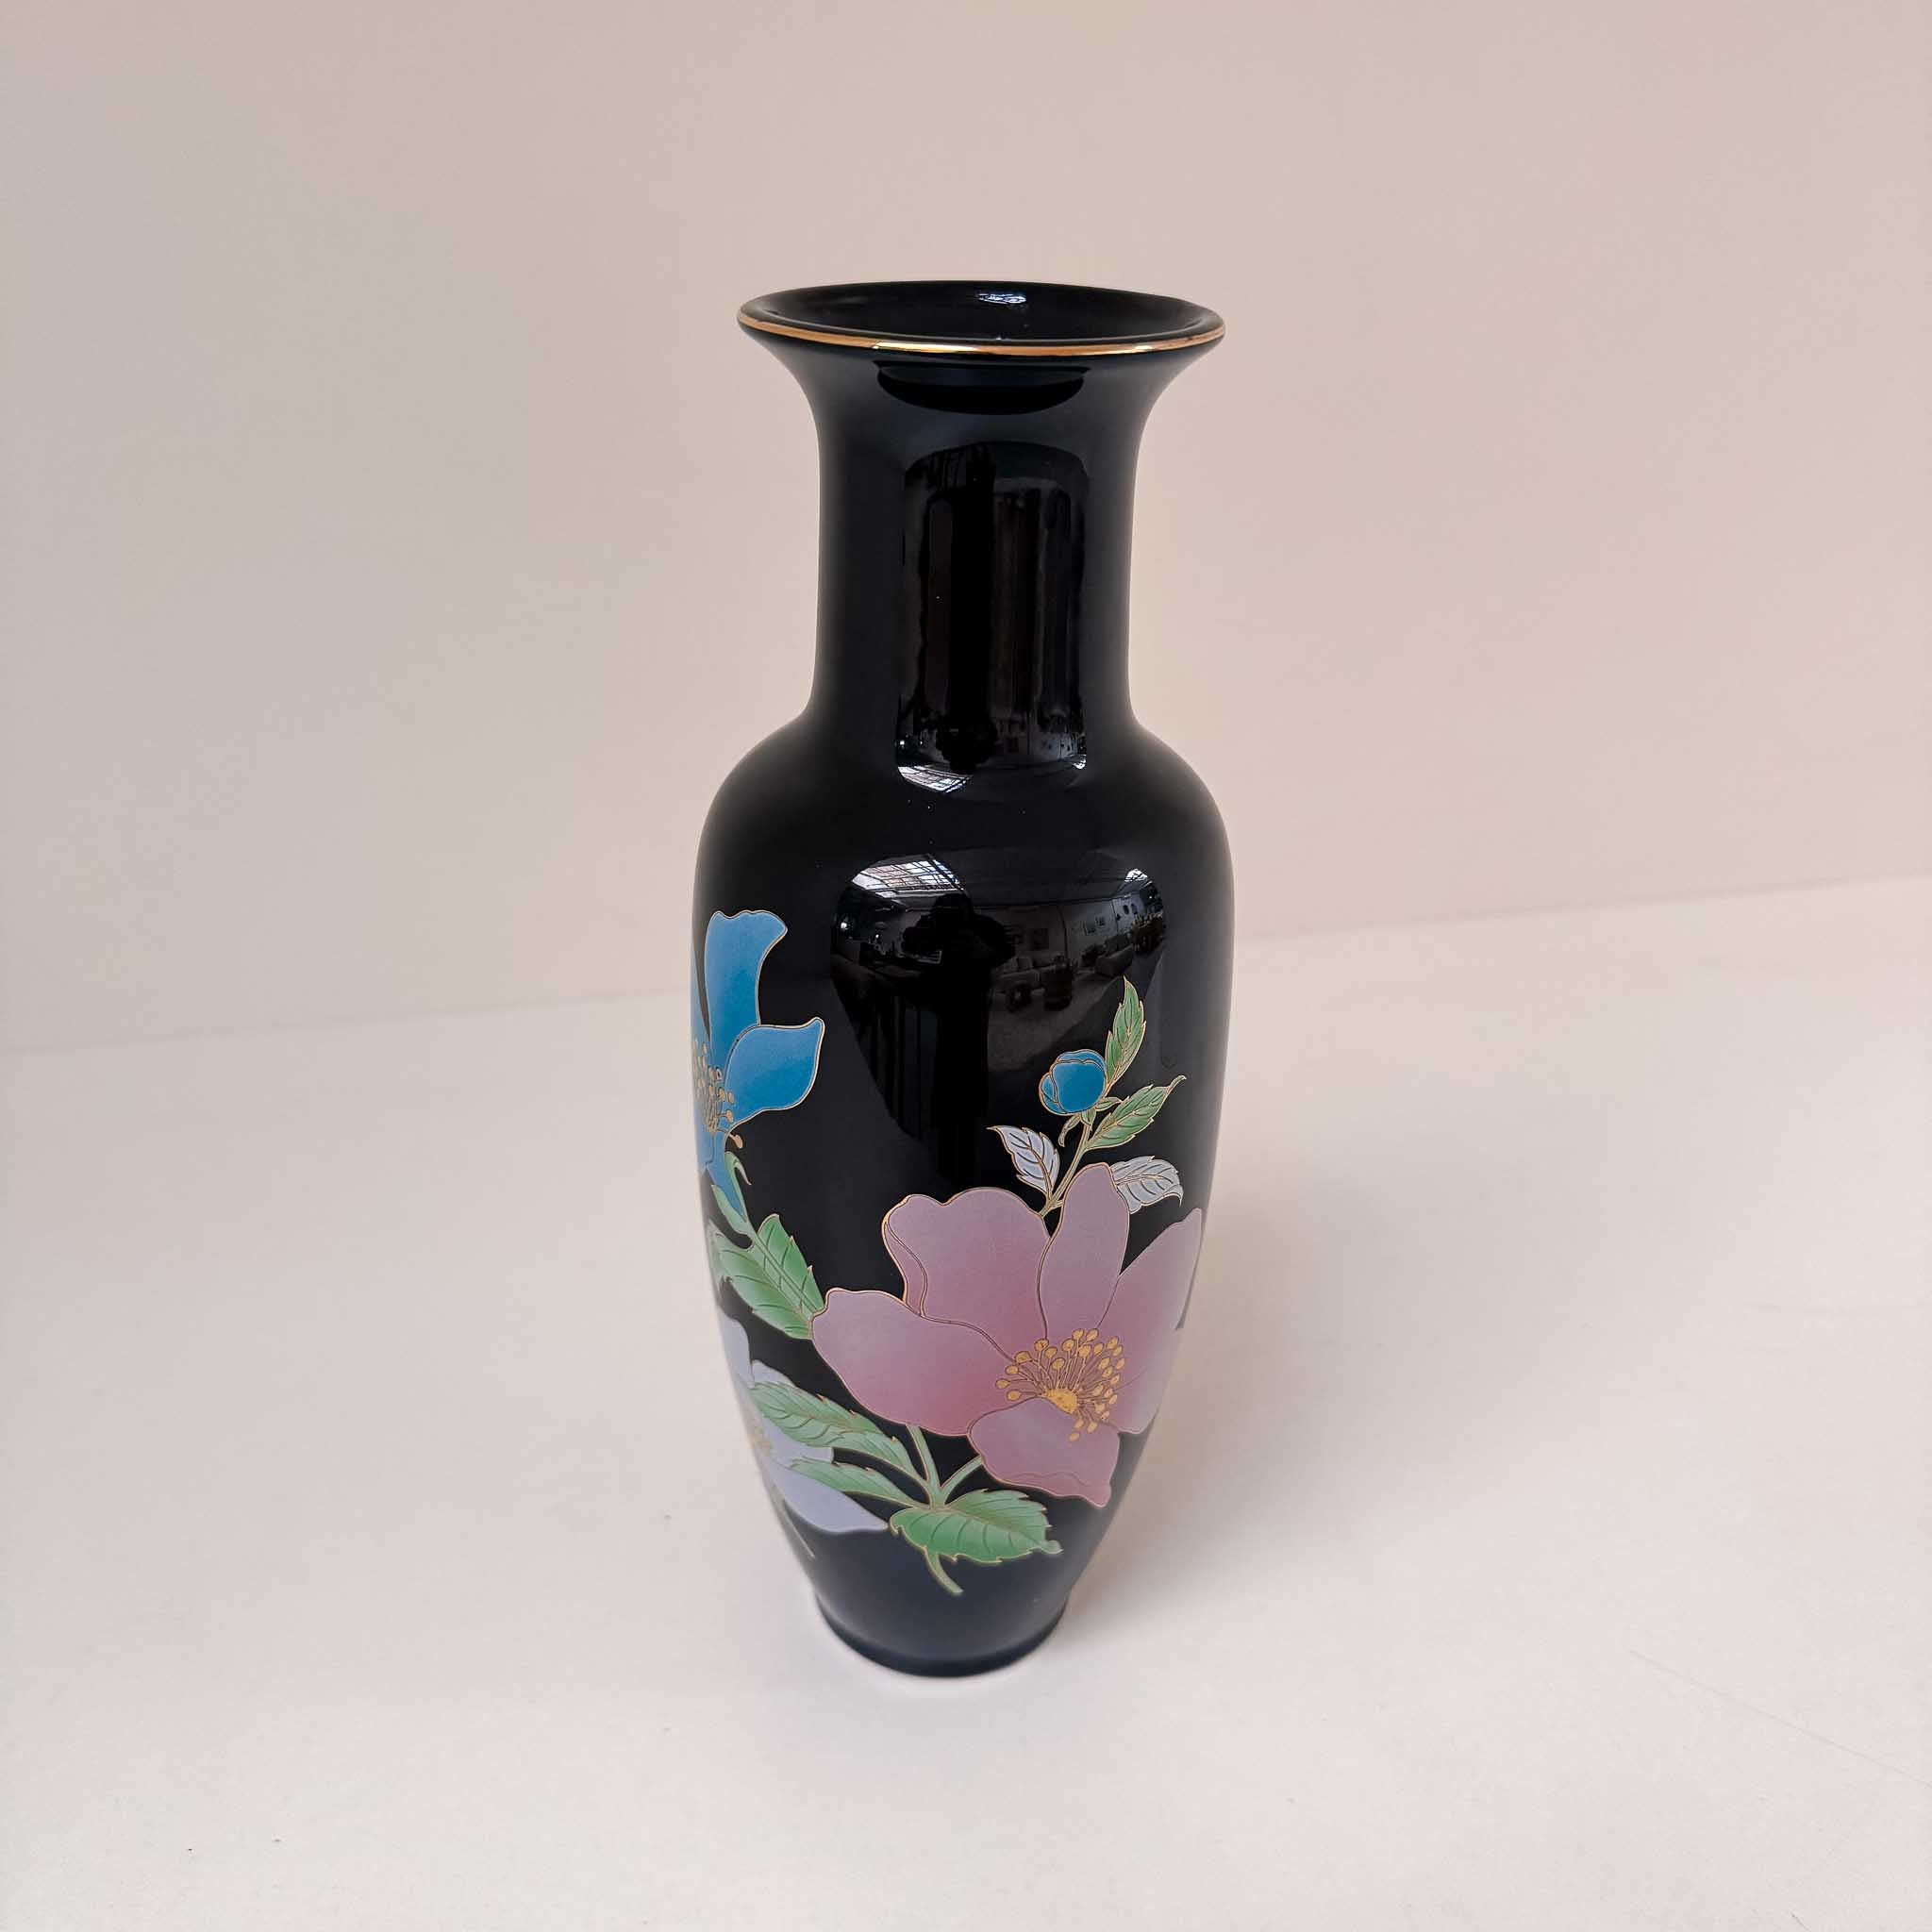 Vintage 80's Japanese Vase, Black with Flowers